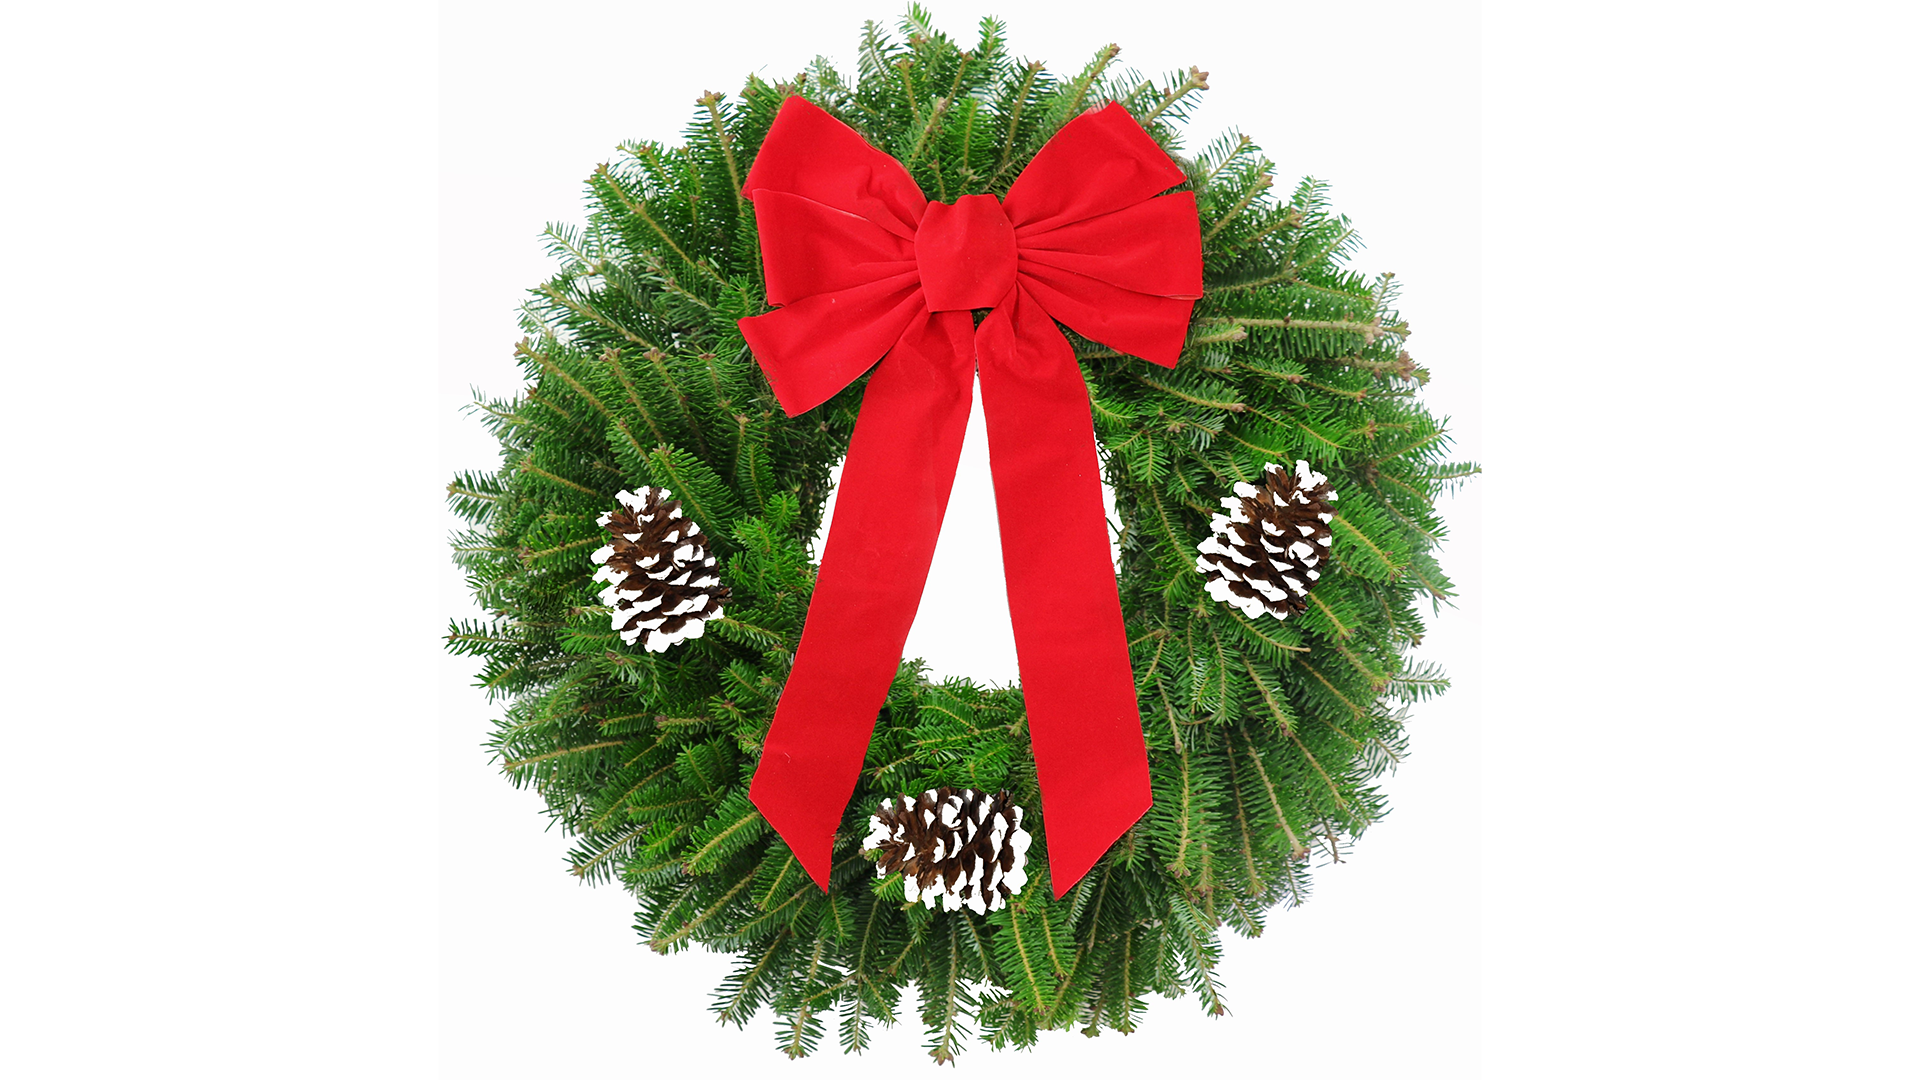 26 inch Premium Fraser Fir Christmas Wreath, Decorated